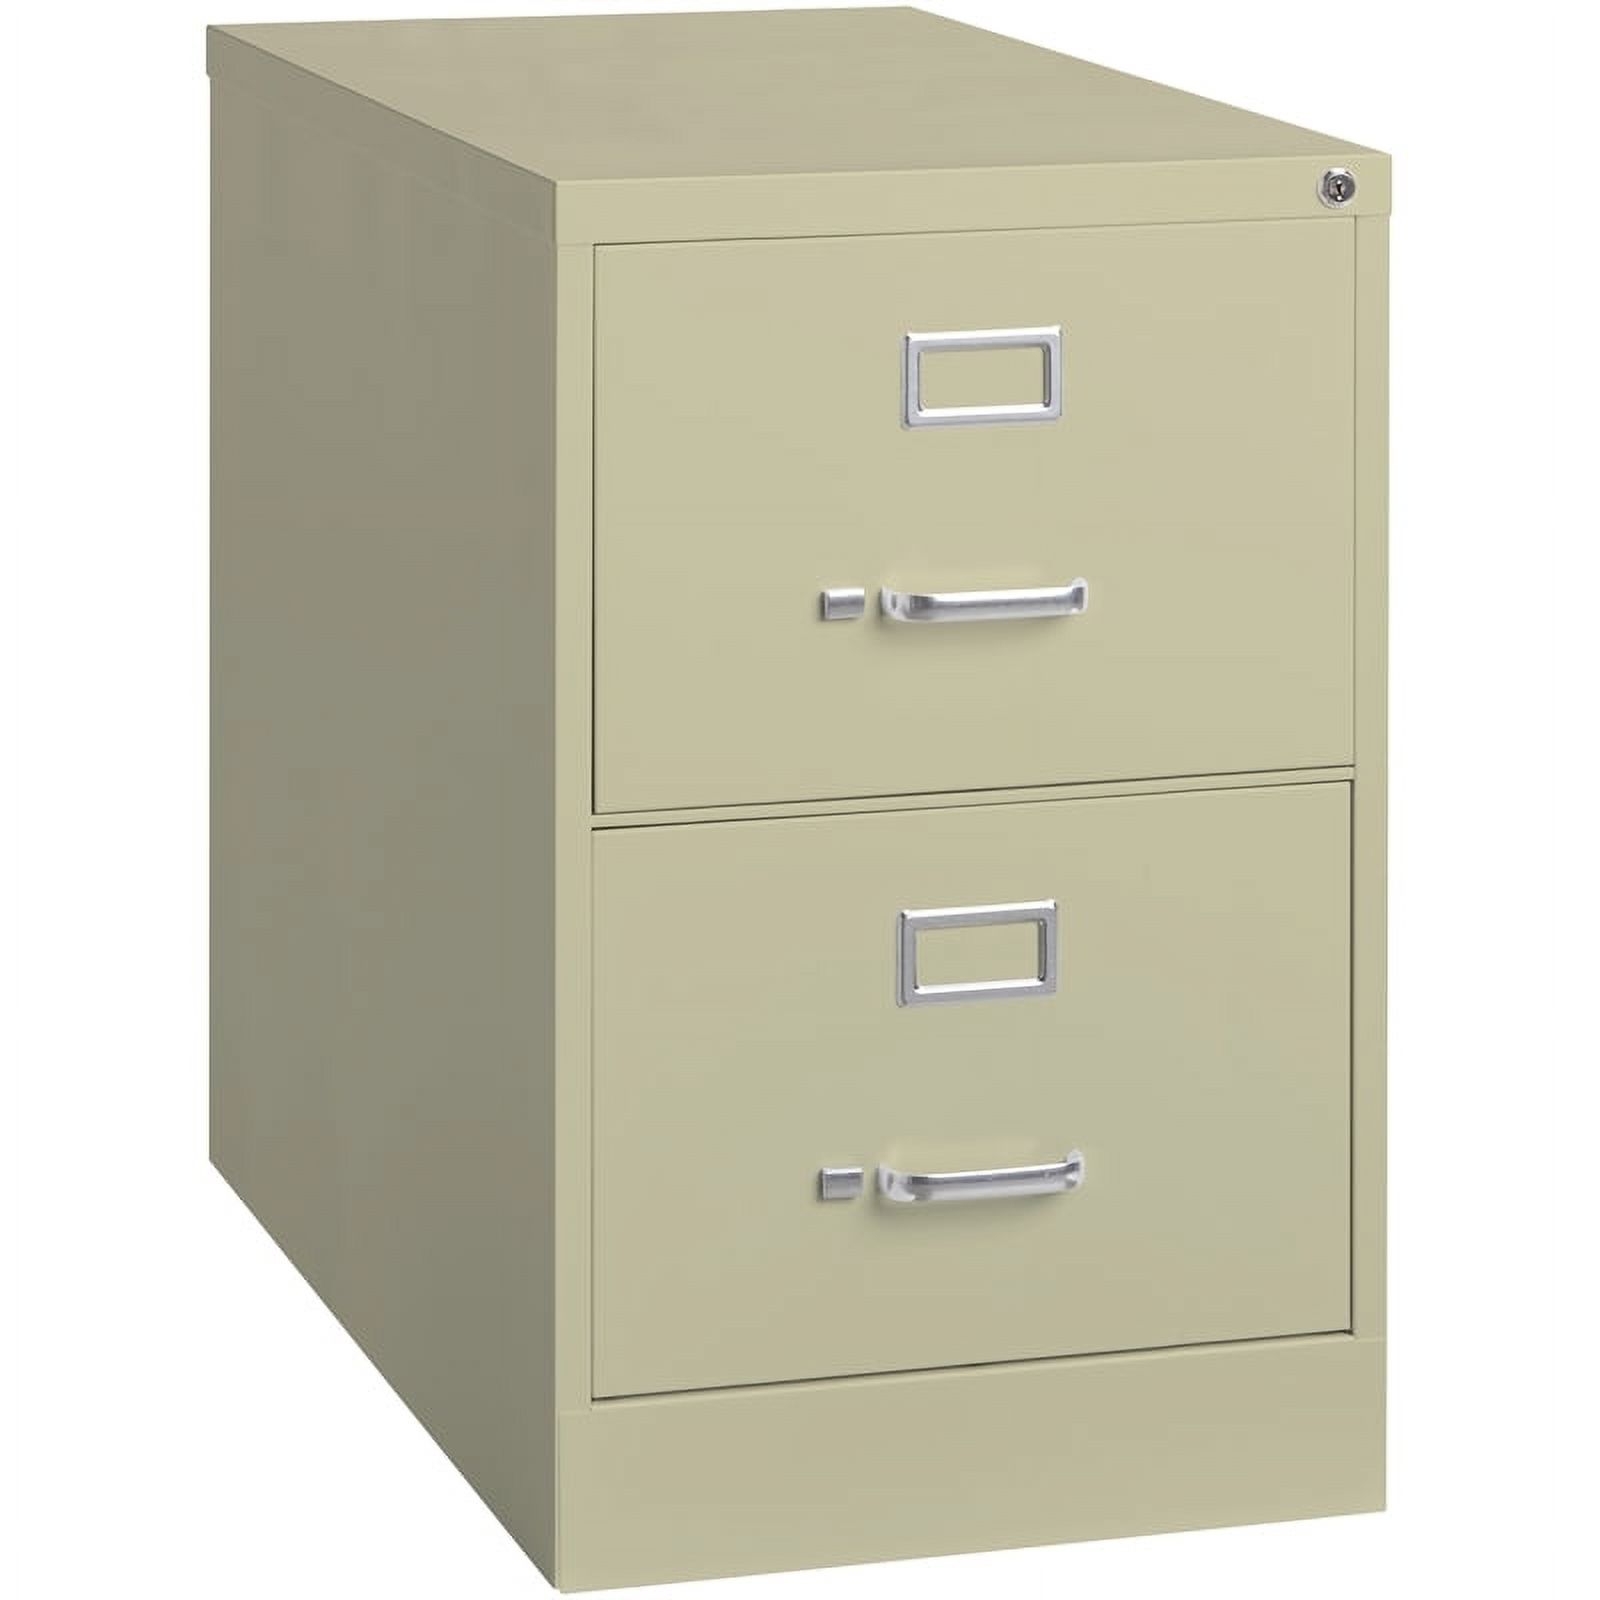 Scranton & Co 26.5" 2-Drawer Metal Legal Width Vertical File Cabinet in Beige - image 1 of 5